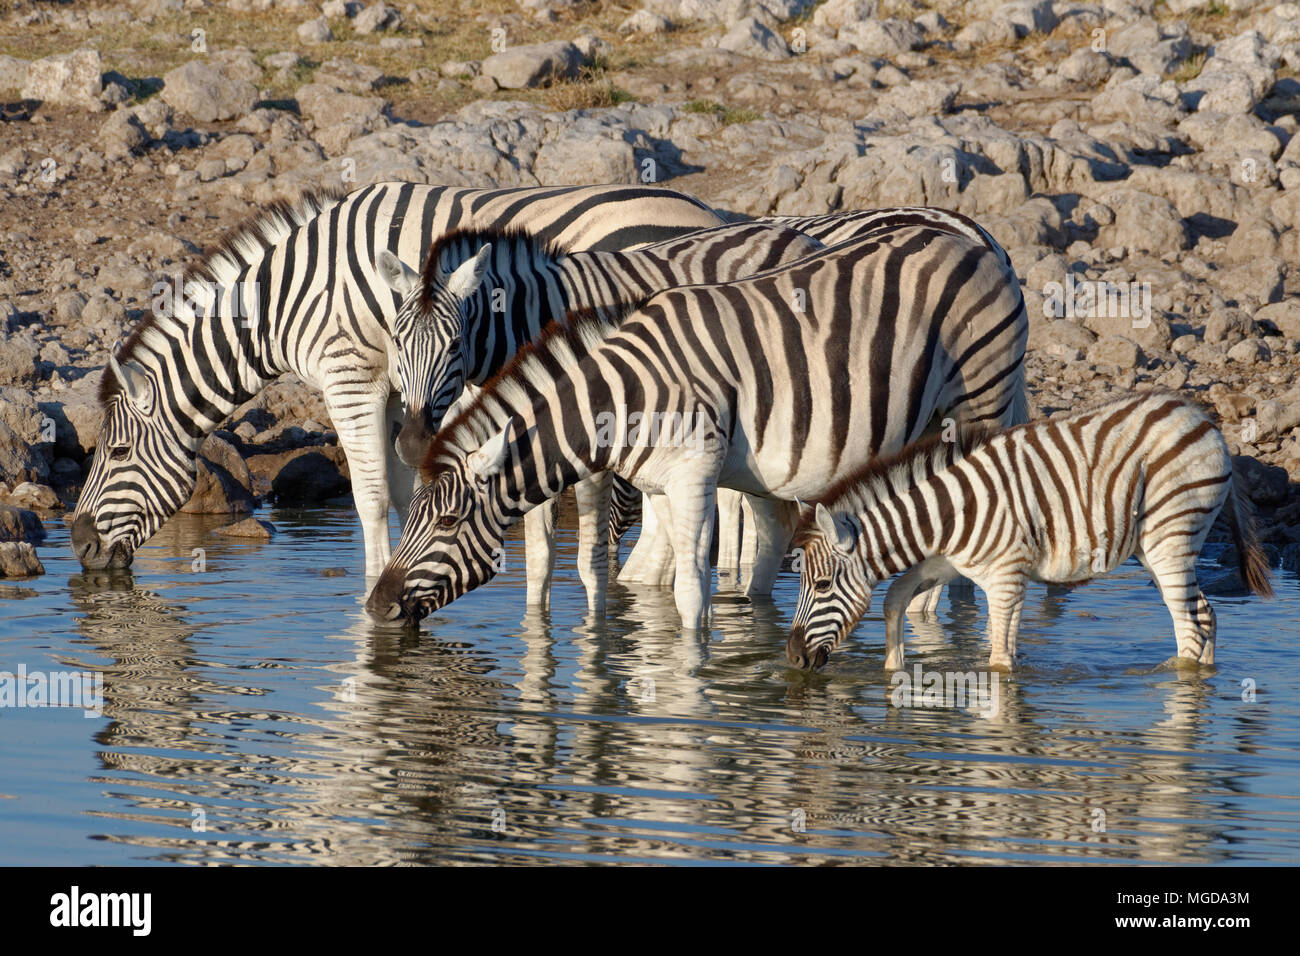 Burchell's zebras (Equus quagga burchellii) standing in water, adults and foal drinking, Okaukuejo waterhole, Etosha National Park, Namibia, Africa Stock Photo